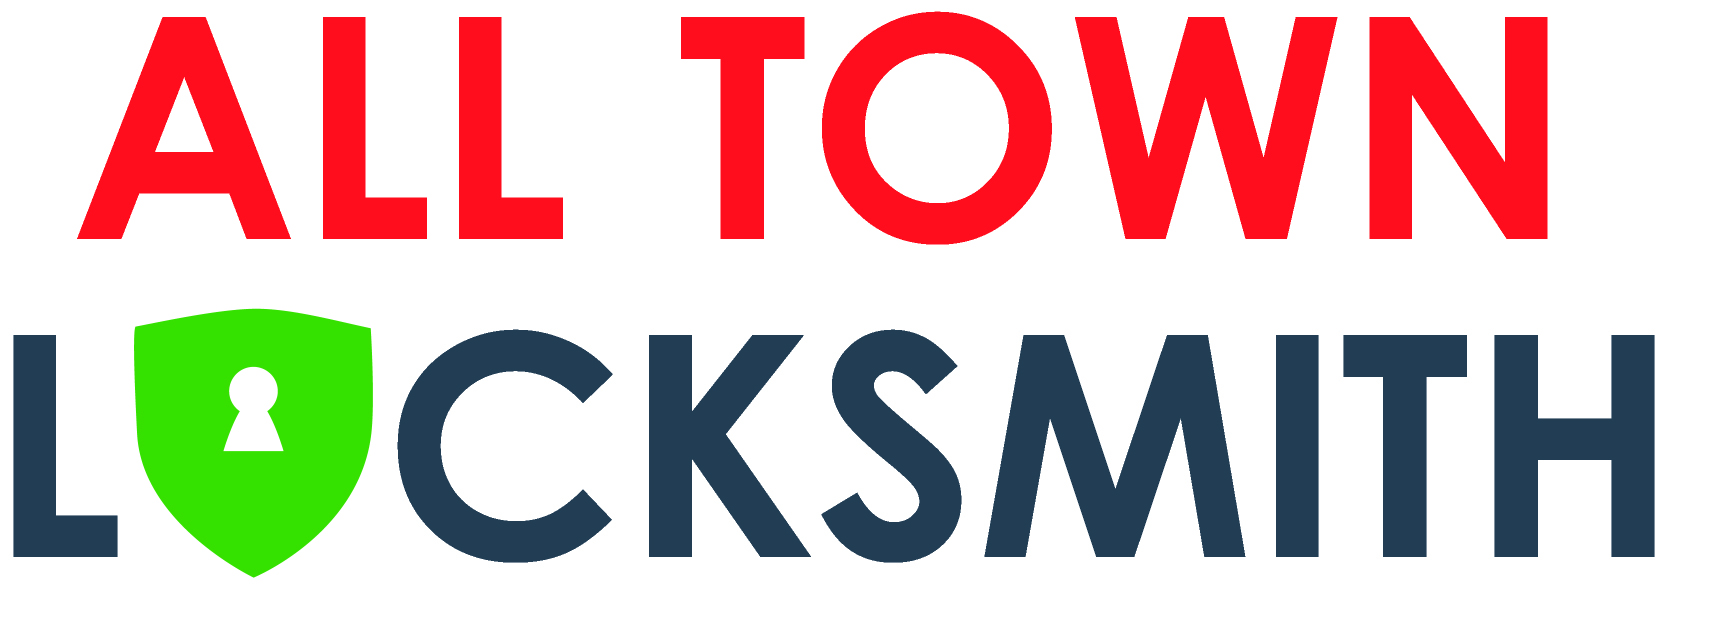  All Town Locksmith